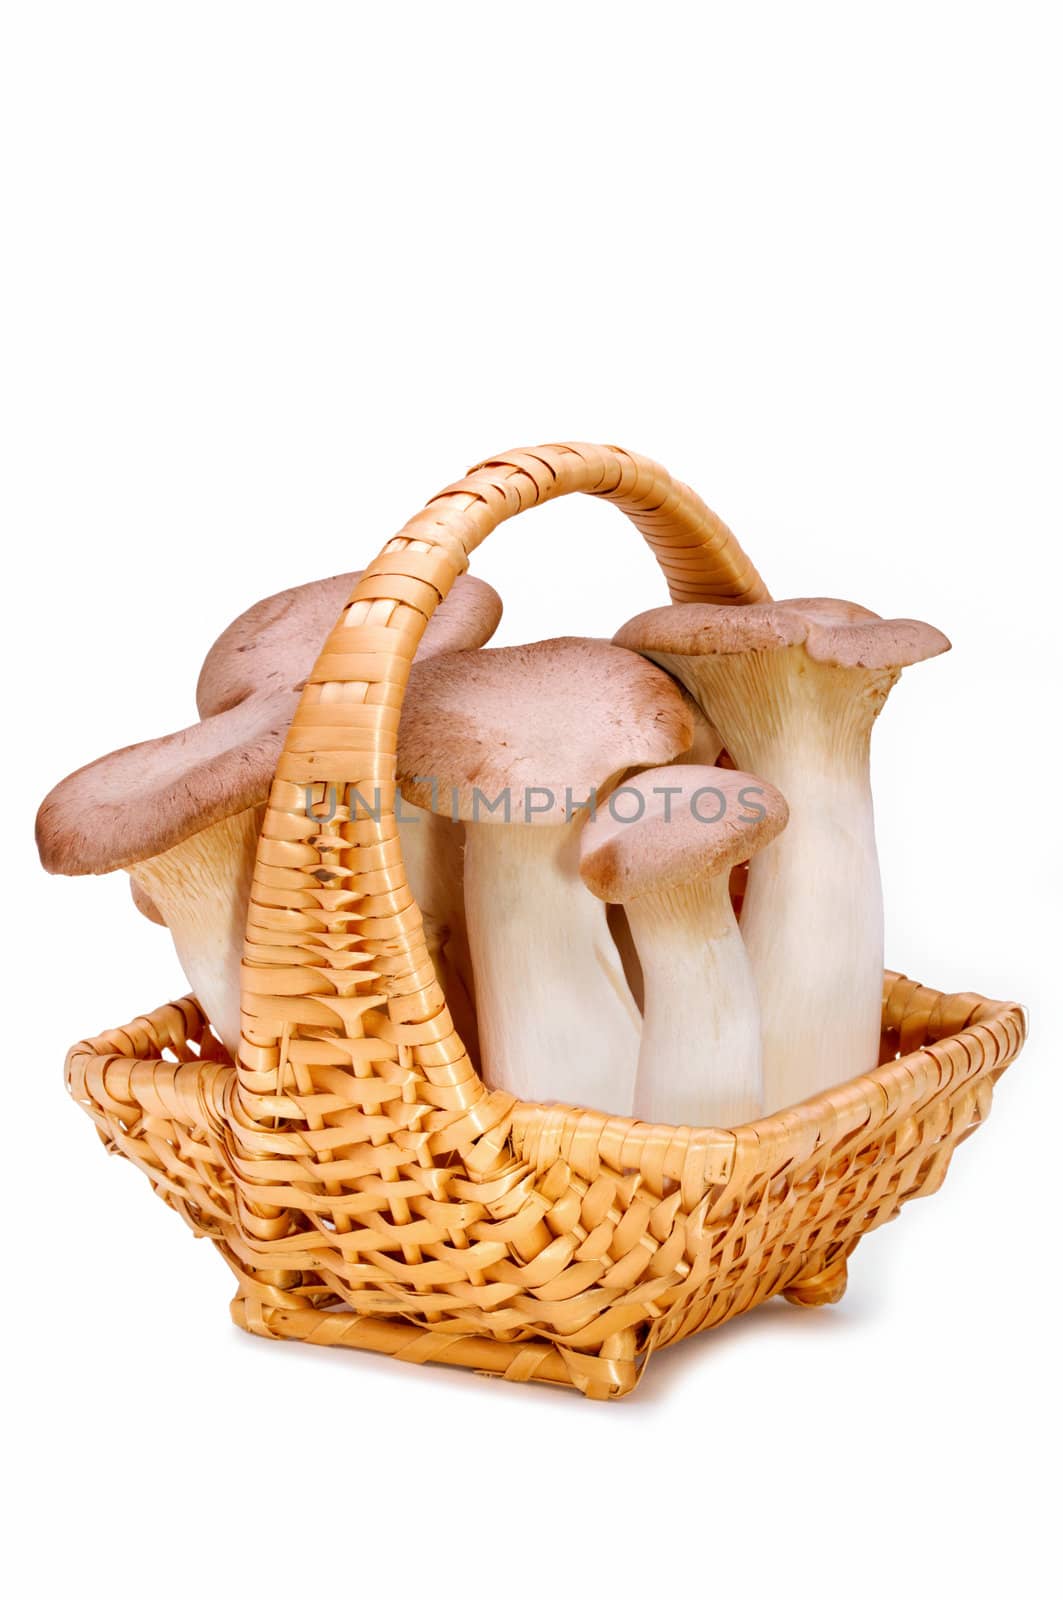 King trumpet. Fresh mushrooms in a basket. by lobzik